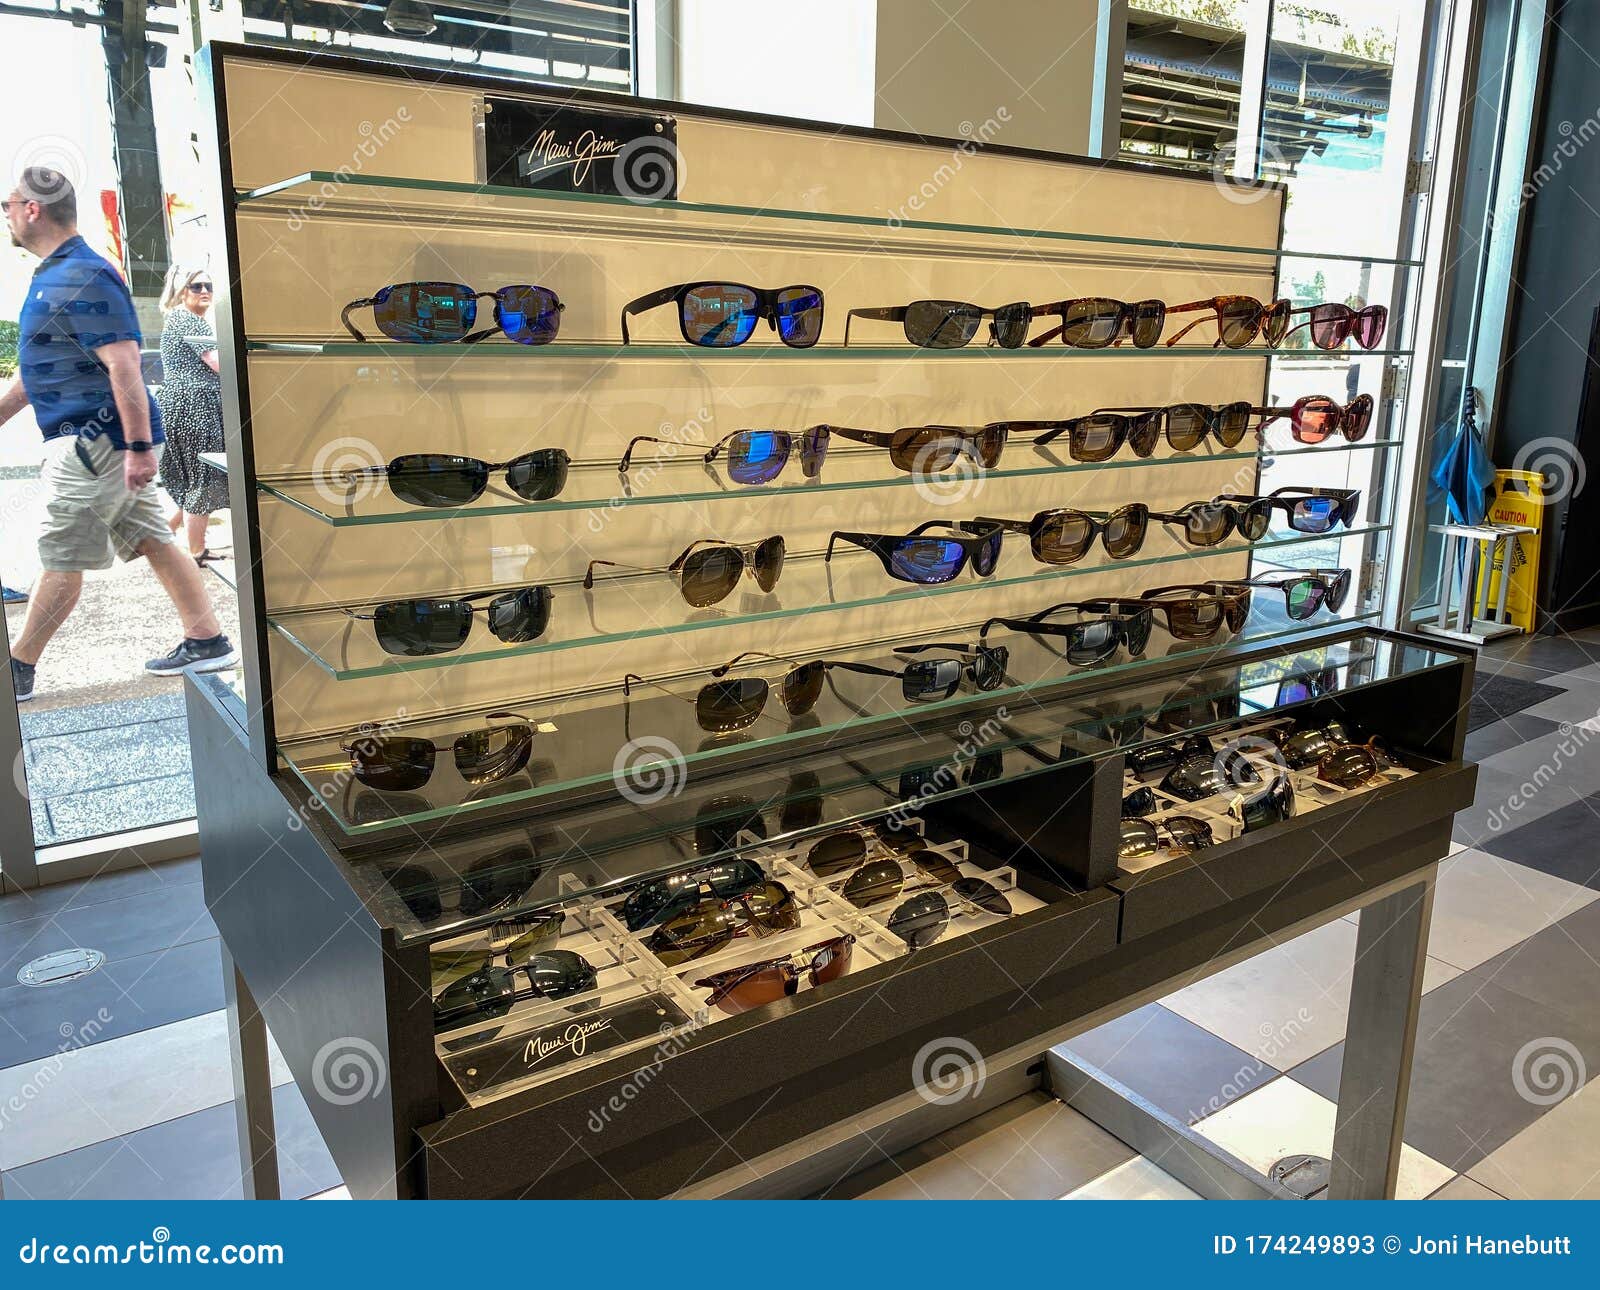 A Display of Maui Jim Sunglasses at Sunglass Hut Retail Store Editorial